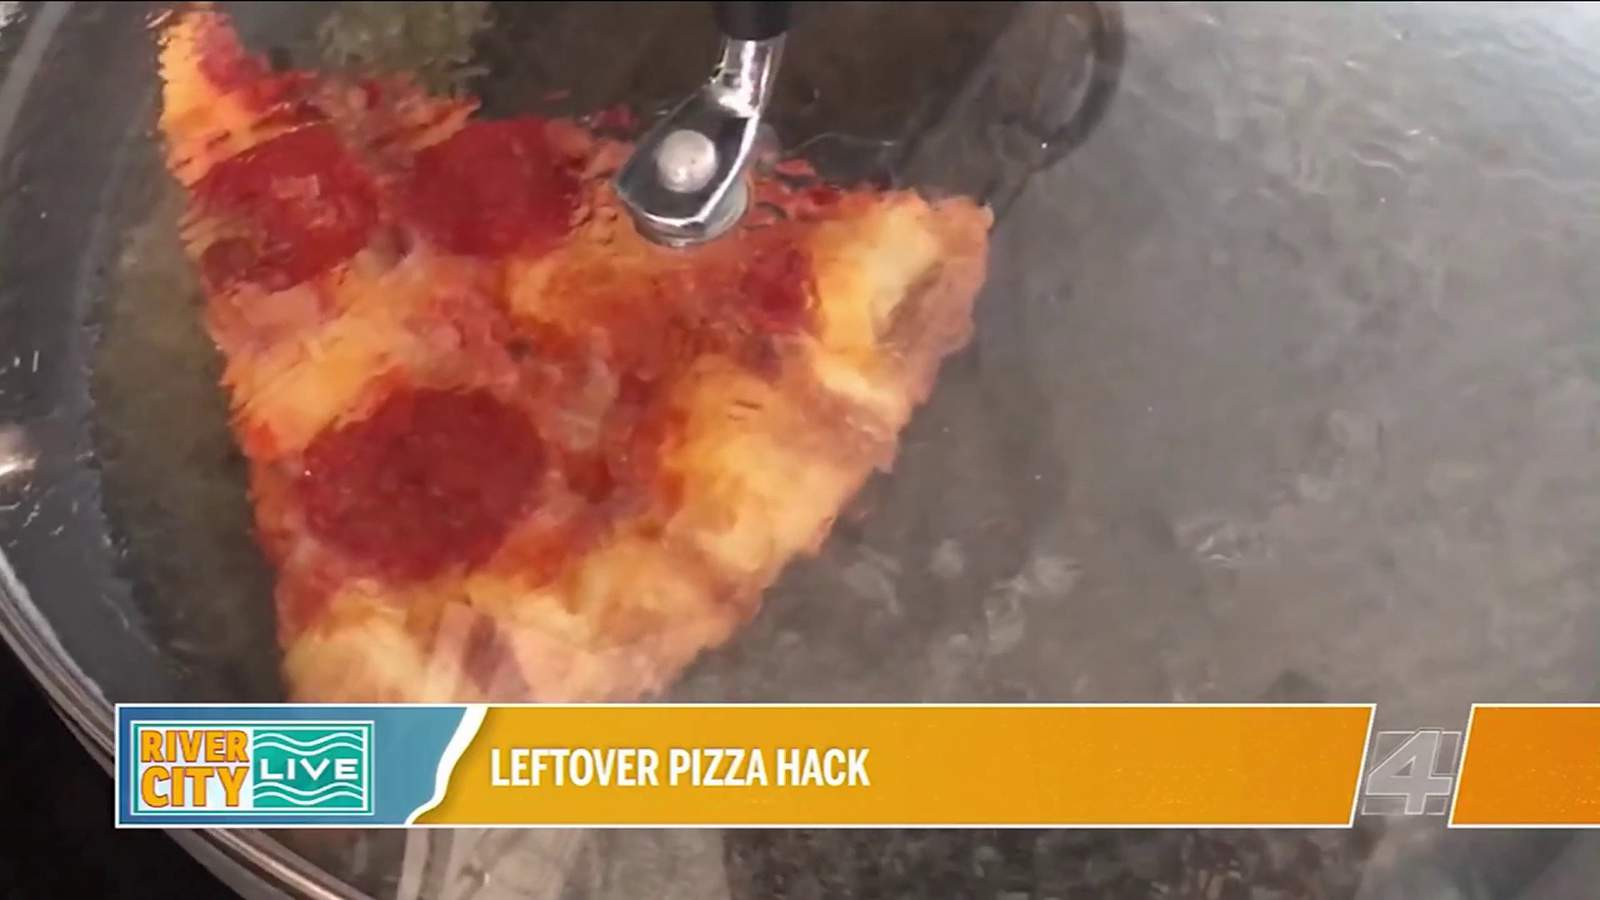 Leftover Pizza Hack | River City Live